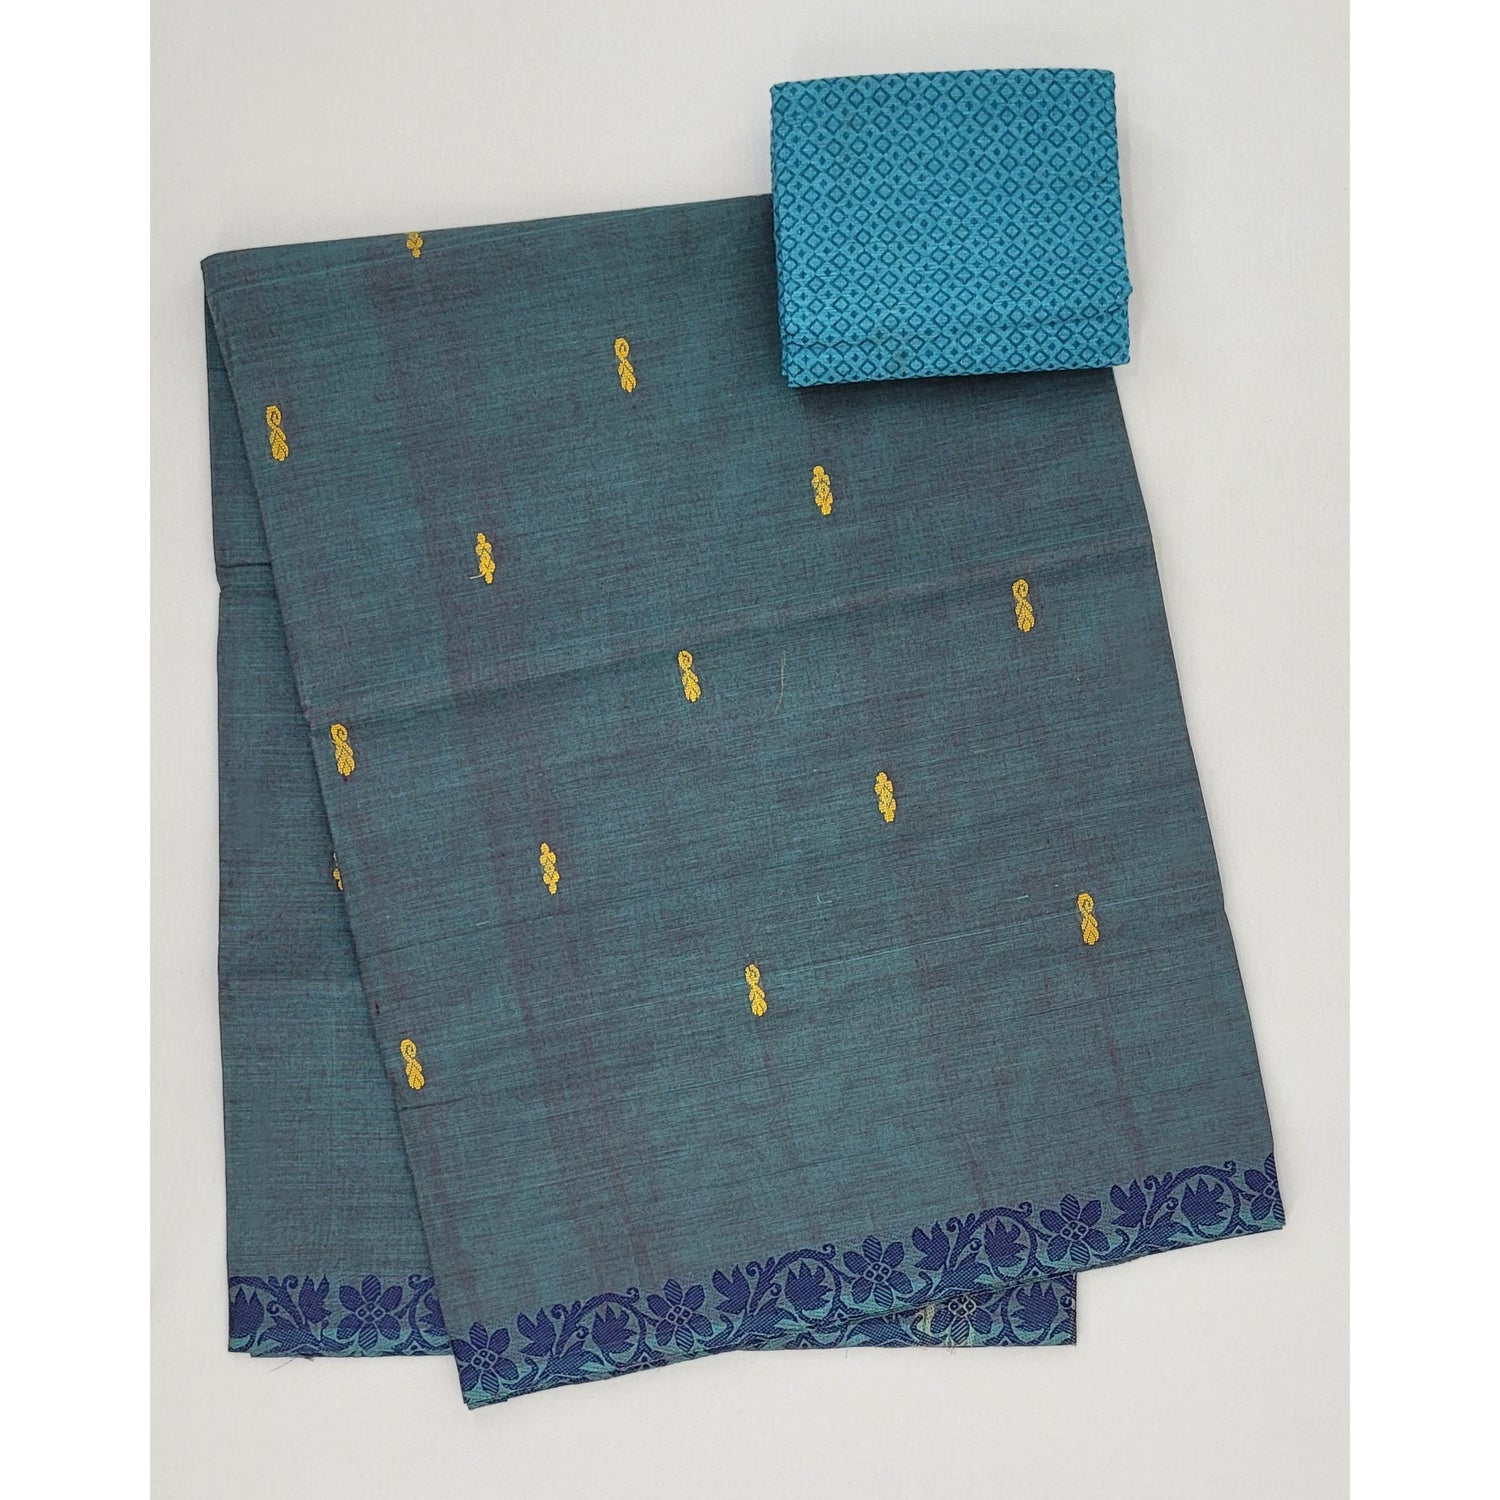 Peacock and Fern Color Venkatagiri Handloom Cotton Saree - Vinshika